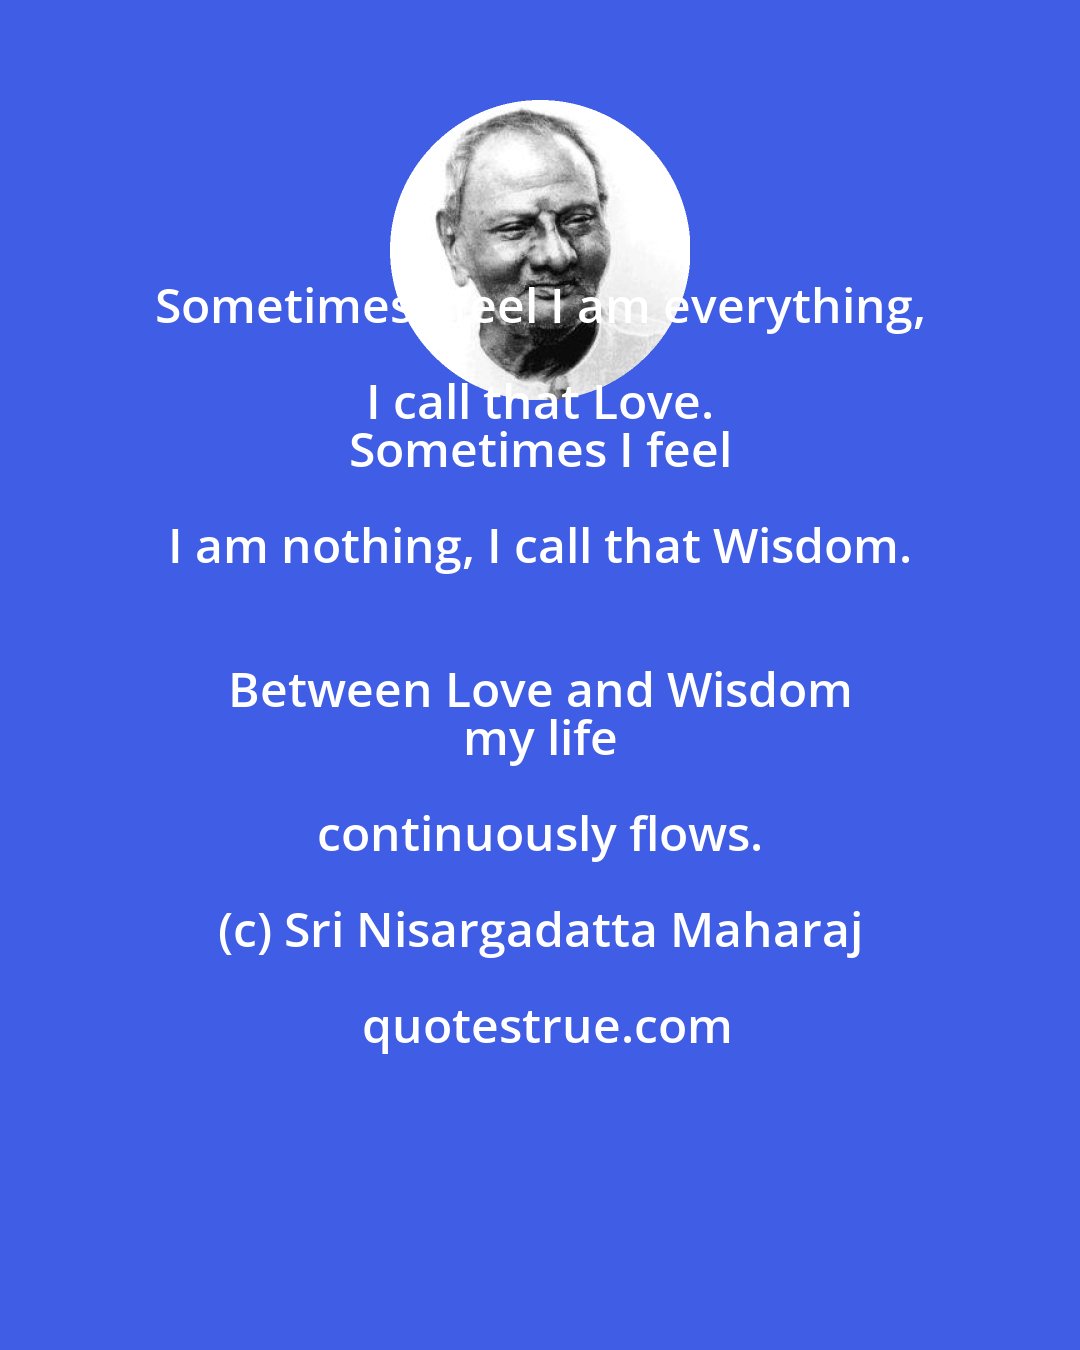 Sri Nisargadatta Maharaj: Sometimes I feel I am everything, I call that Love. 
 Sometimes I feel I am nothing, I call that Wisdom. 
 Between Love and Wisdom 
 my life continuously flows.